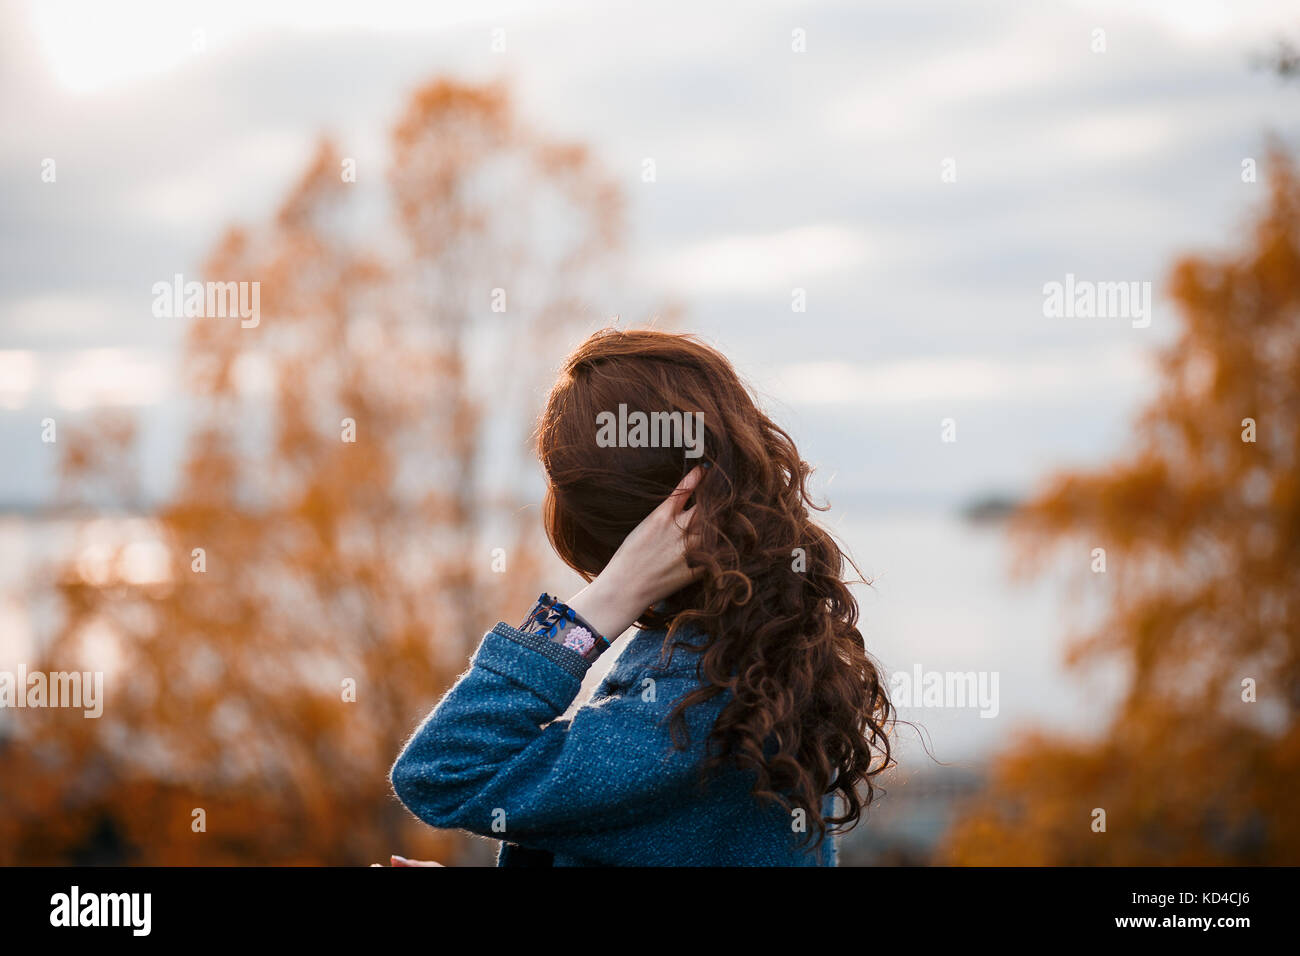 Cheveux bouclés belle young caucasian girl outdoors wearing Blue Coat, posing in autumn park Banque D'Images